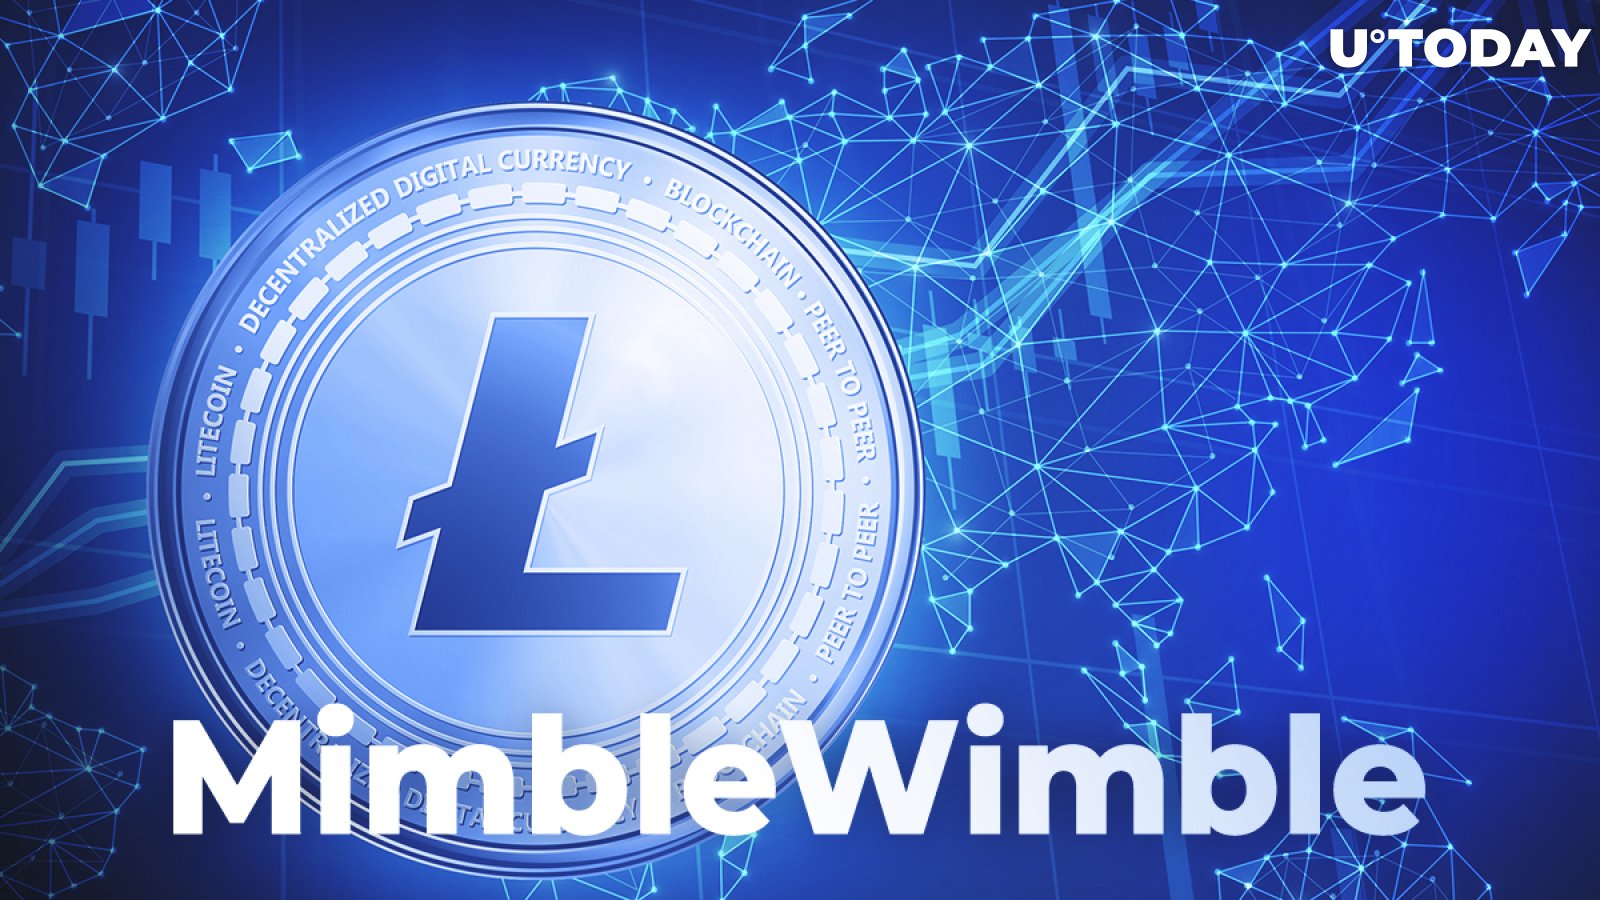 Litecoin’s Implementation of MimbleWimble: Details Disclosed by Dev